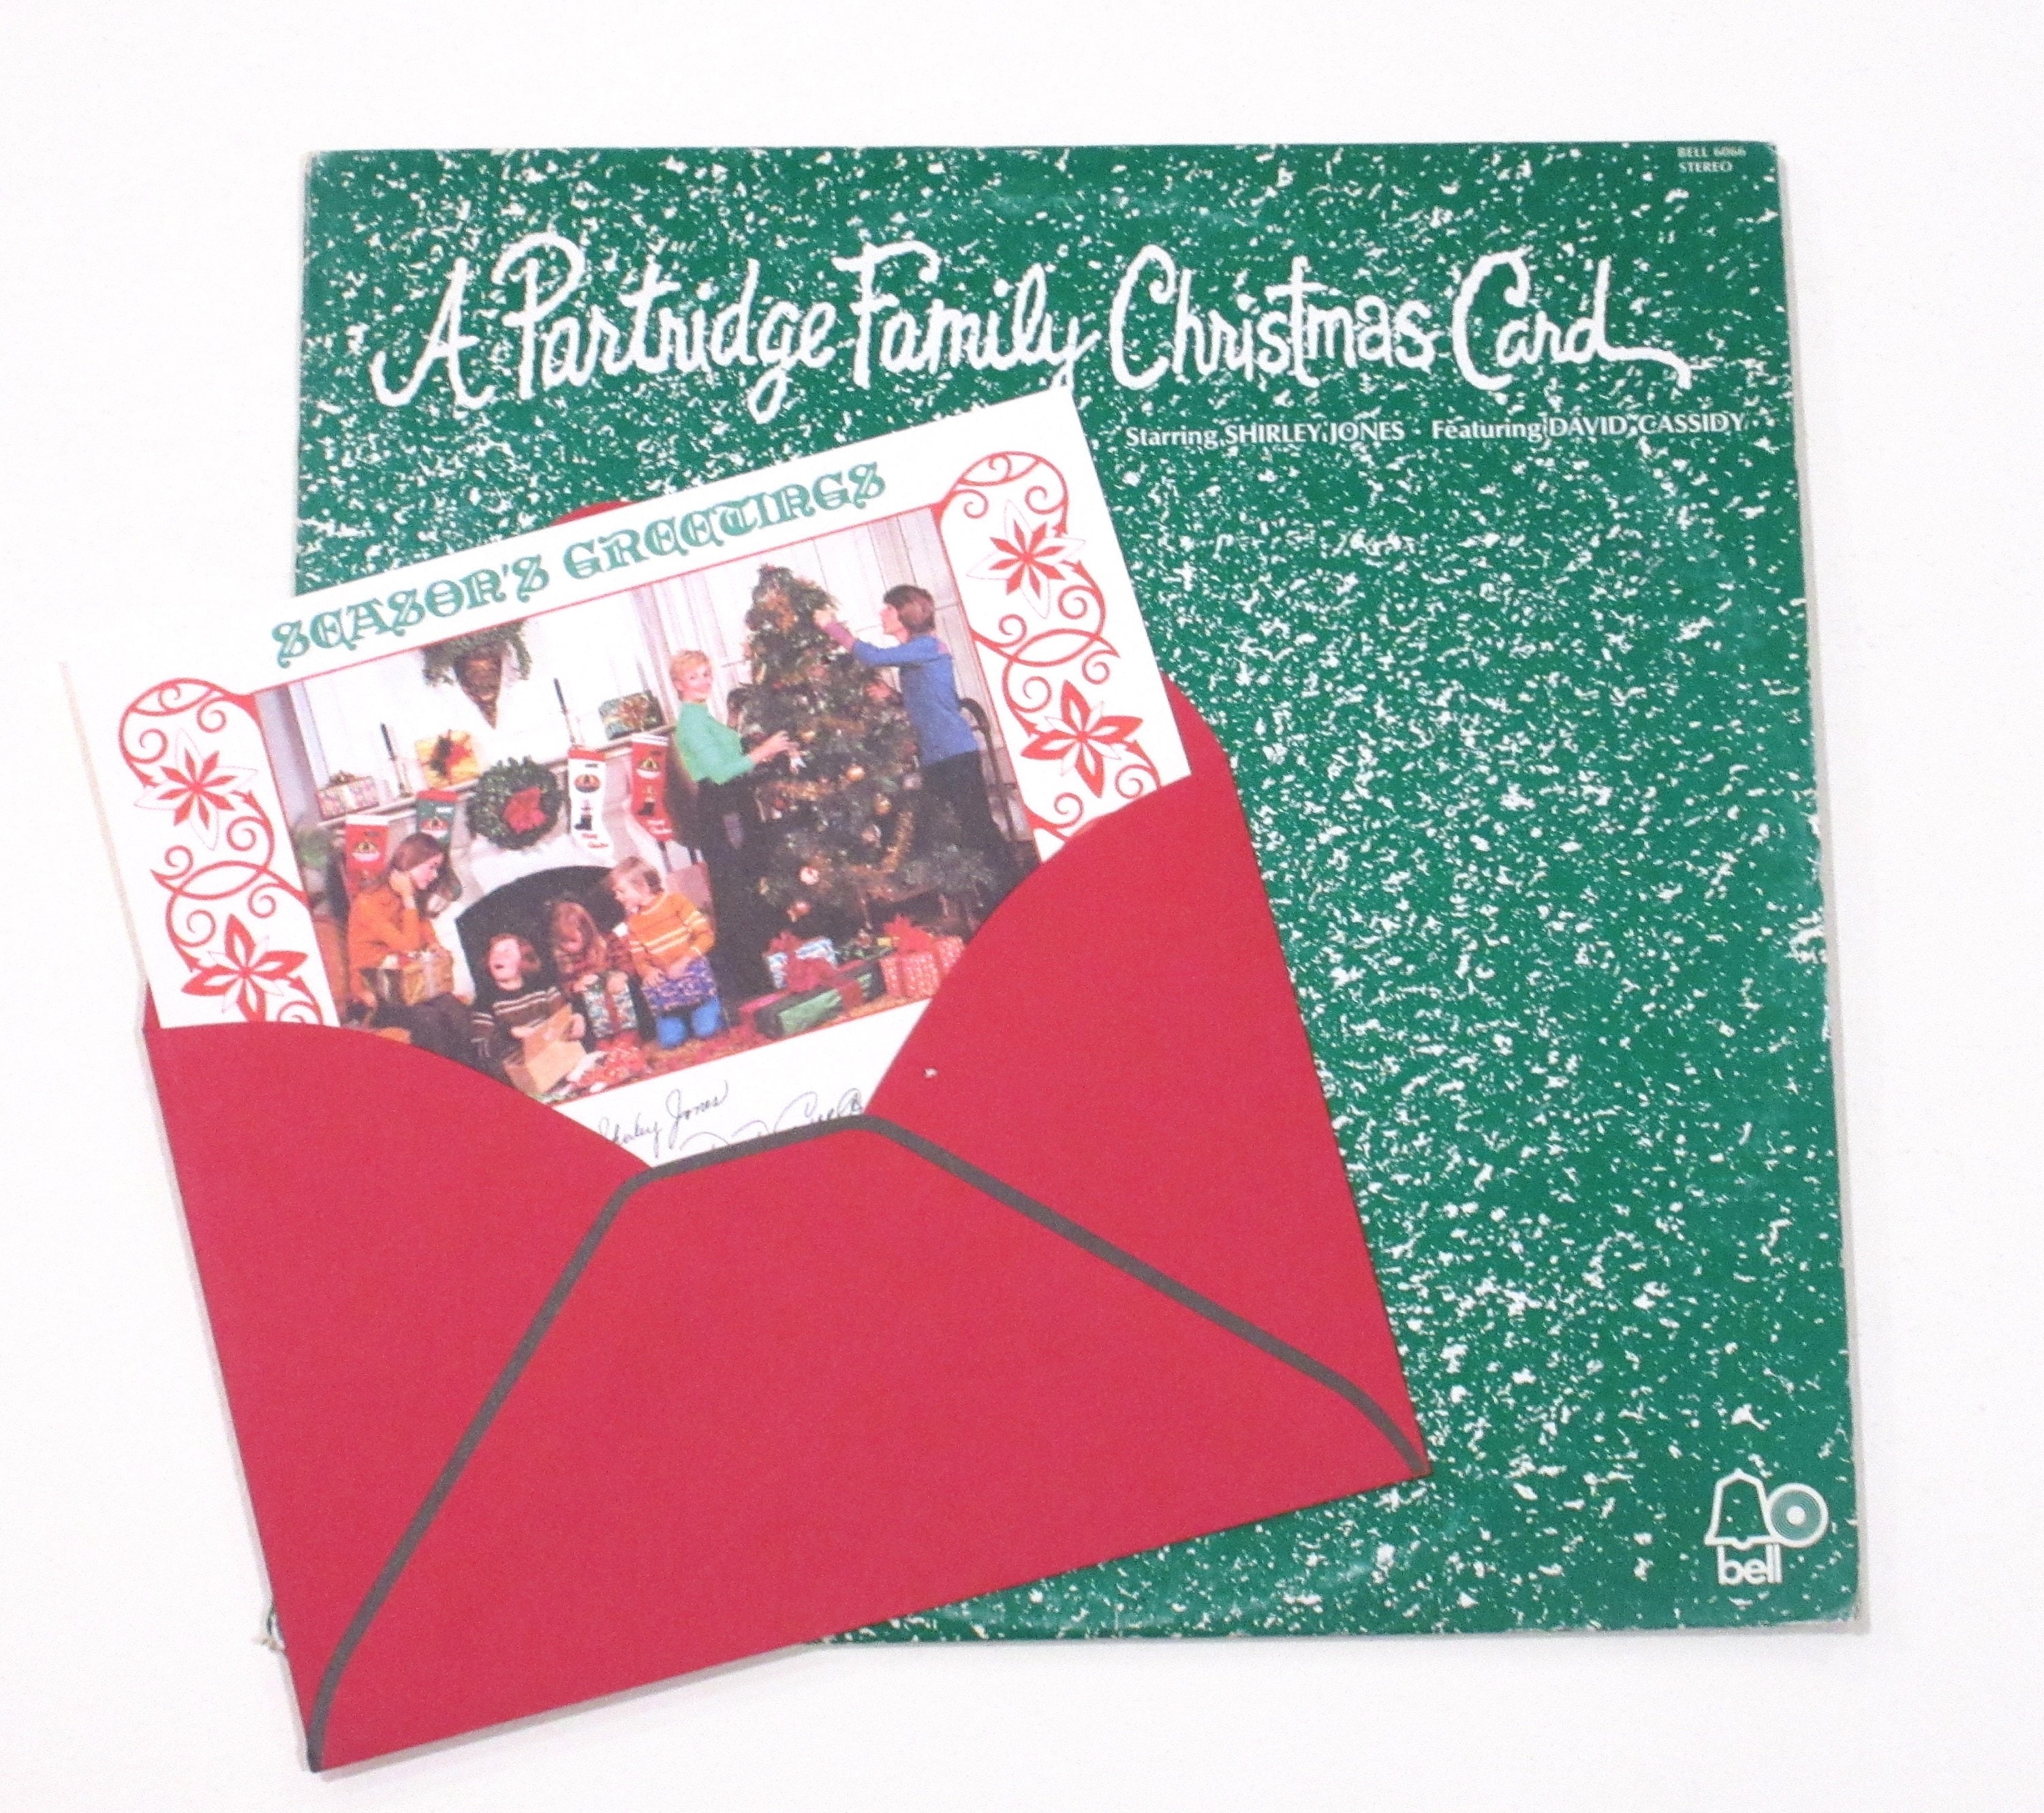 CD - Partridge Family Christmas Card Starring Shirley Jones & David Cassidy